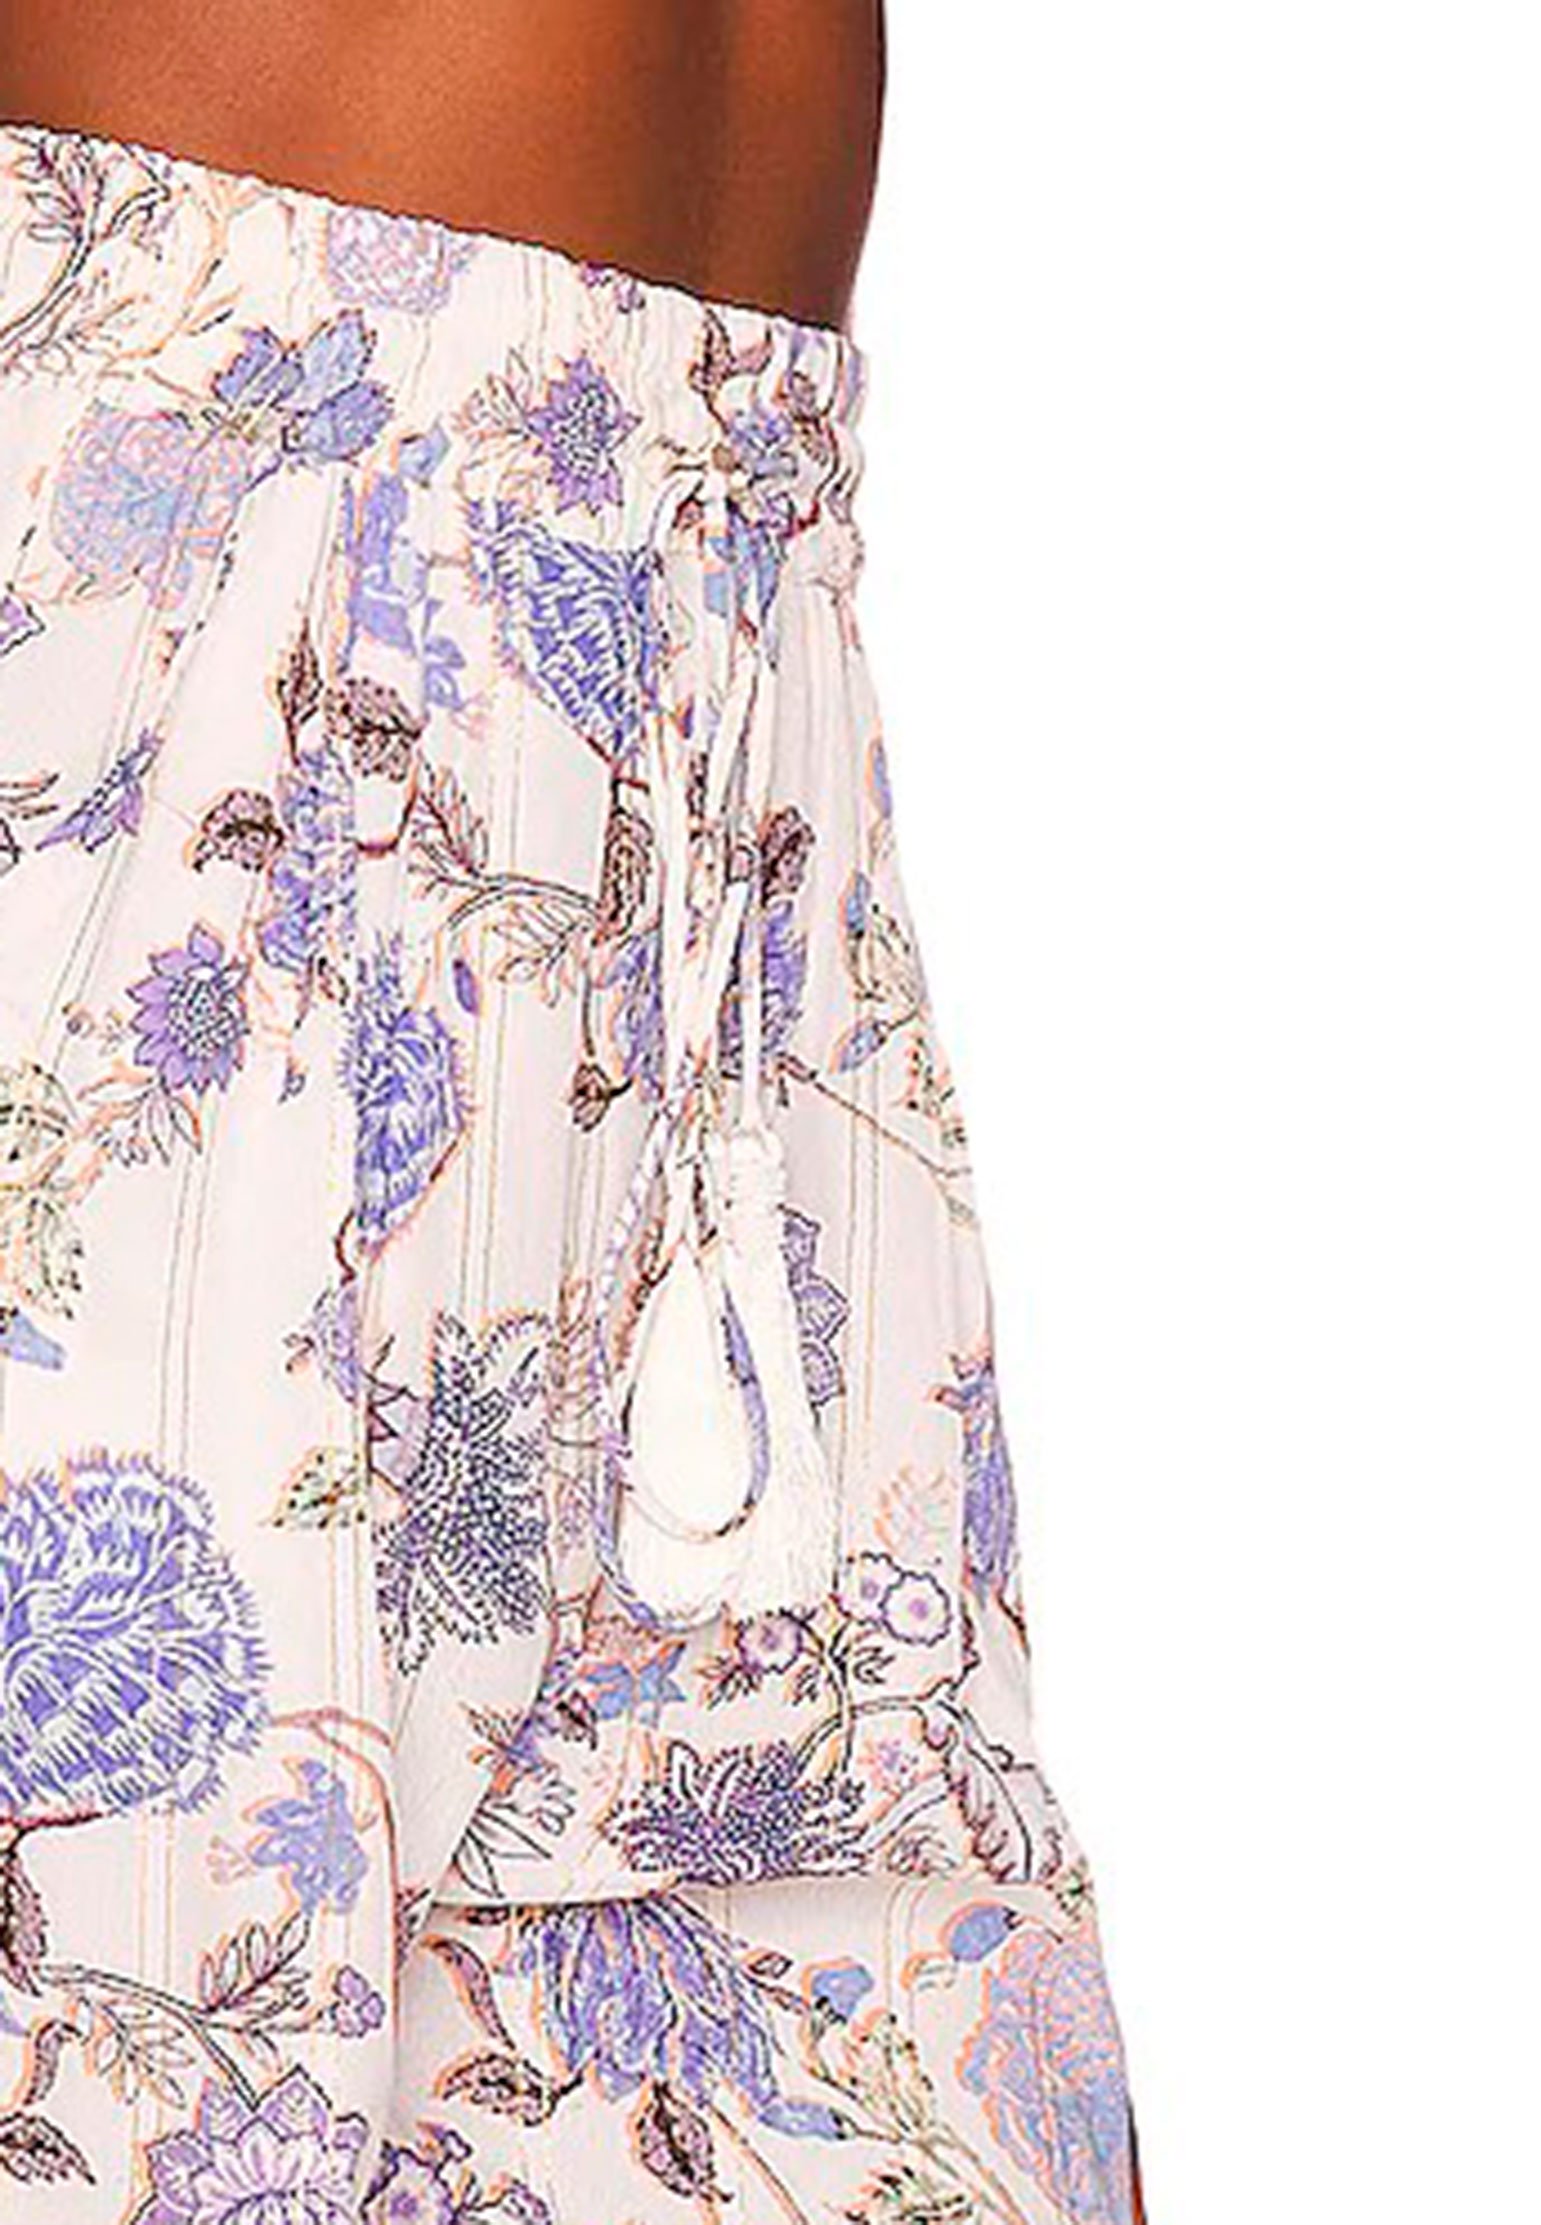 Pants HEMANT&NANDITA Color: lilas (Code: 1118) in online store Allure